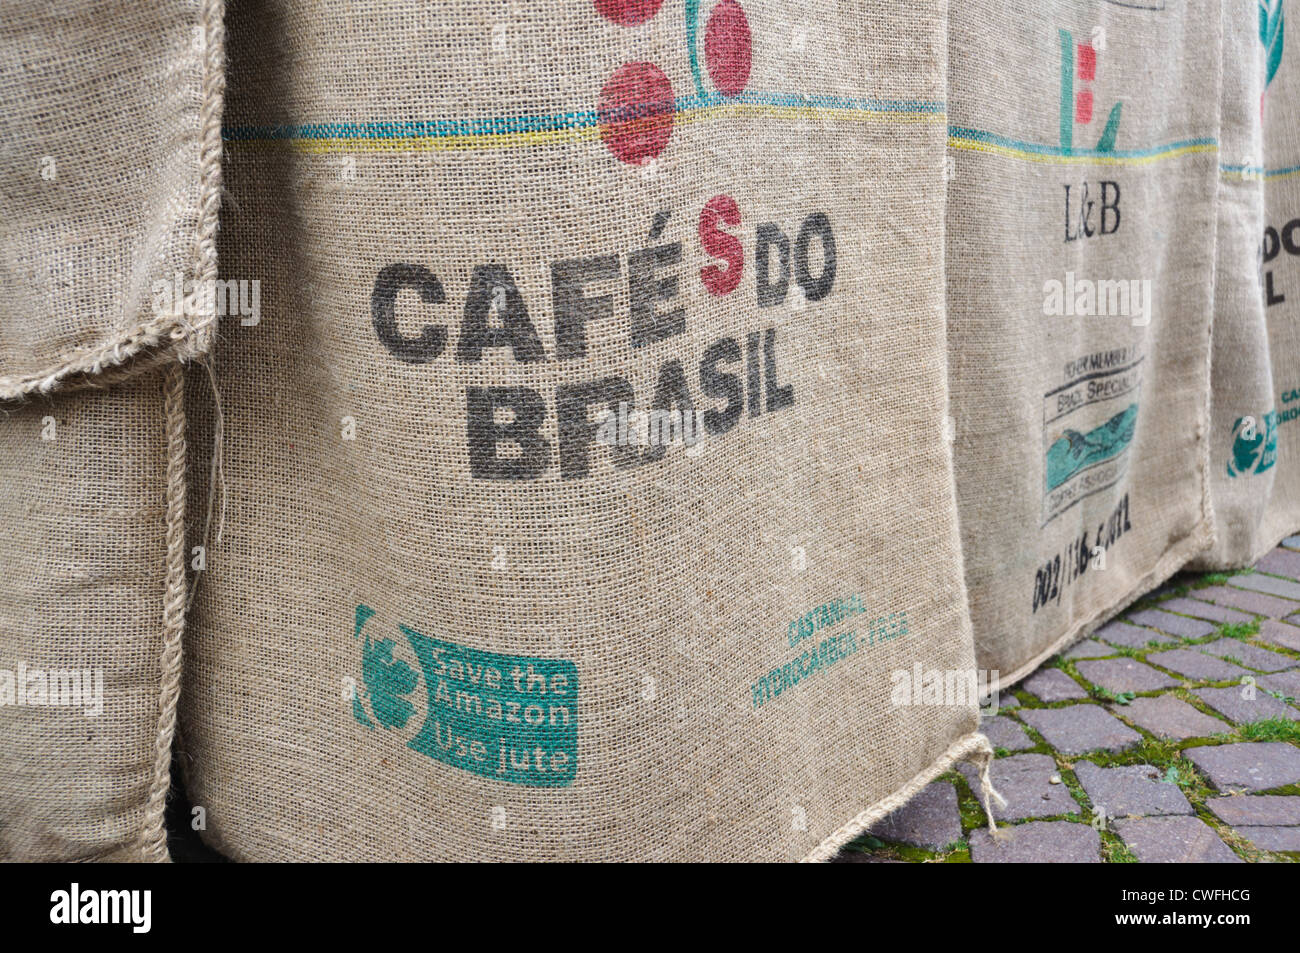 CAFÉ S DO BRASIL Save the Amazon use jute bag for Brazilian coffee Stock Photo